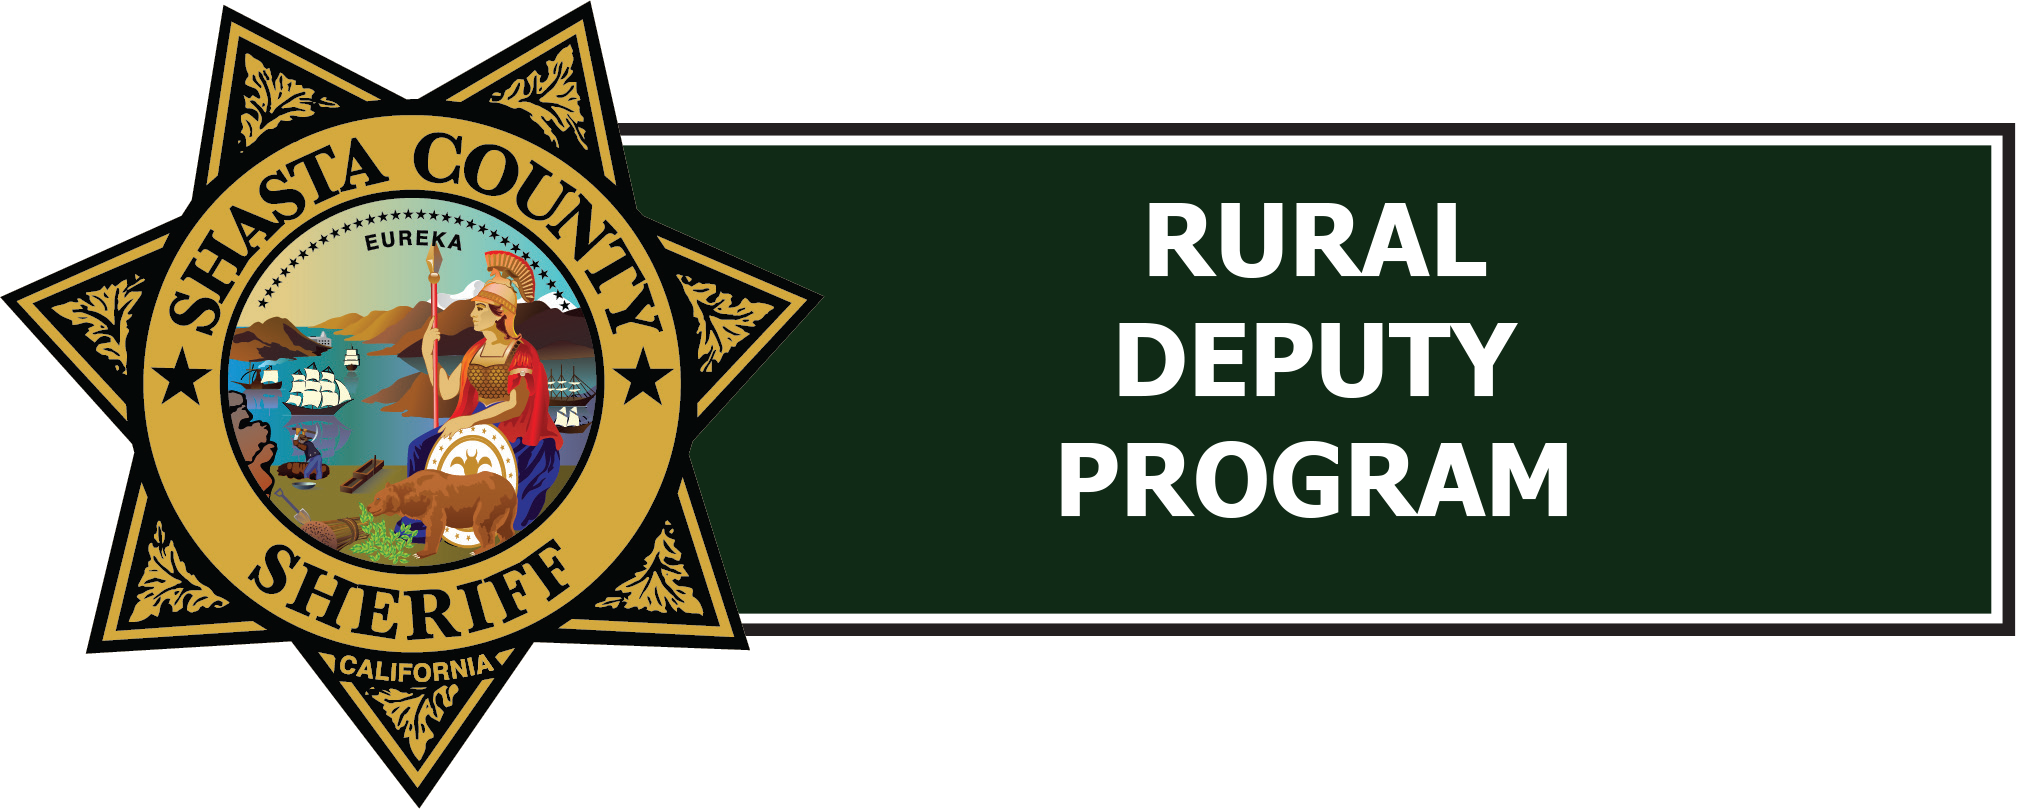 Rural Deputy Program Shasta County California